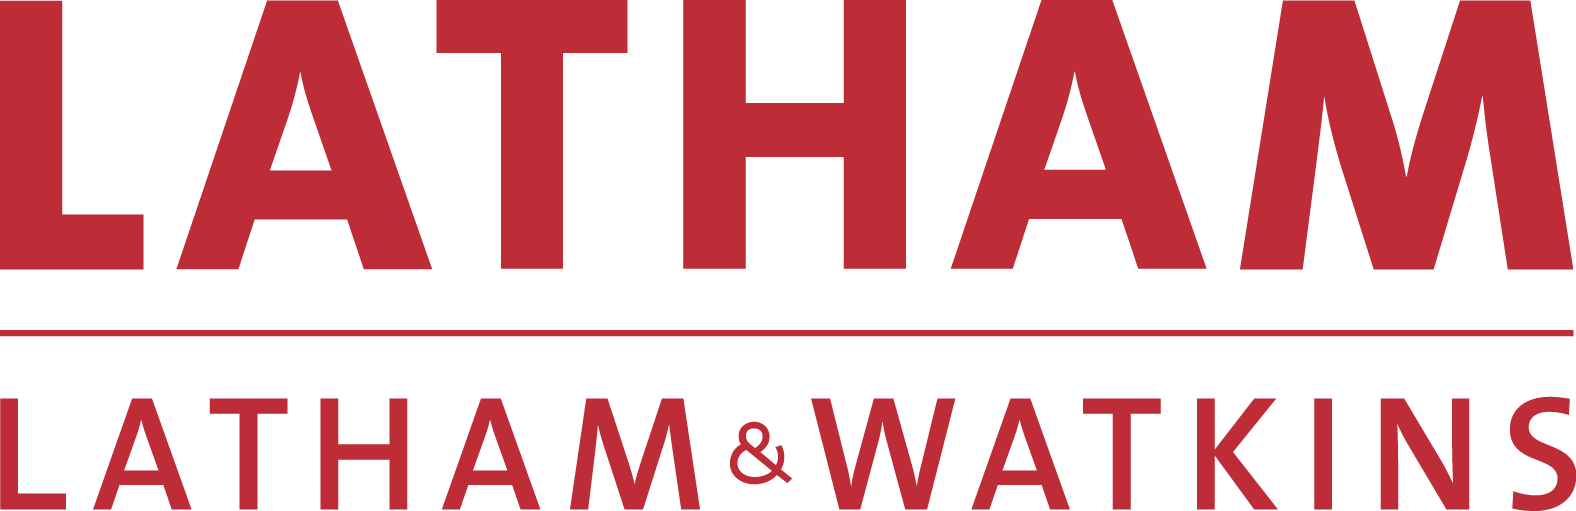 Latham & Watkins Logo - Sponsor Logo - Latham & Watkins - Massachusetts Black Lawyers ...